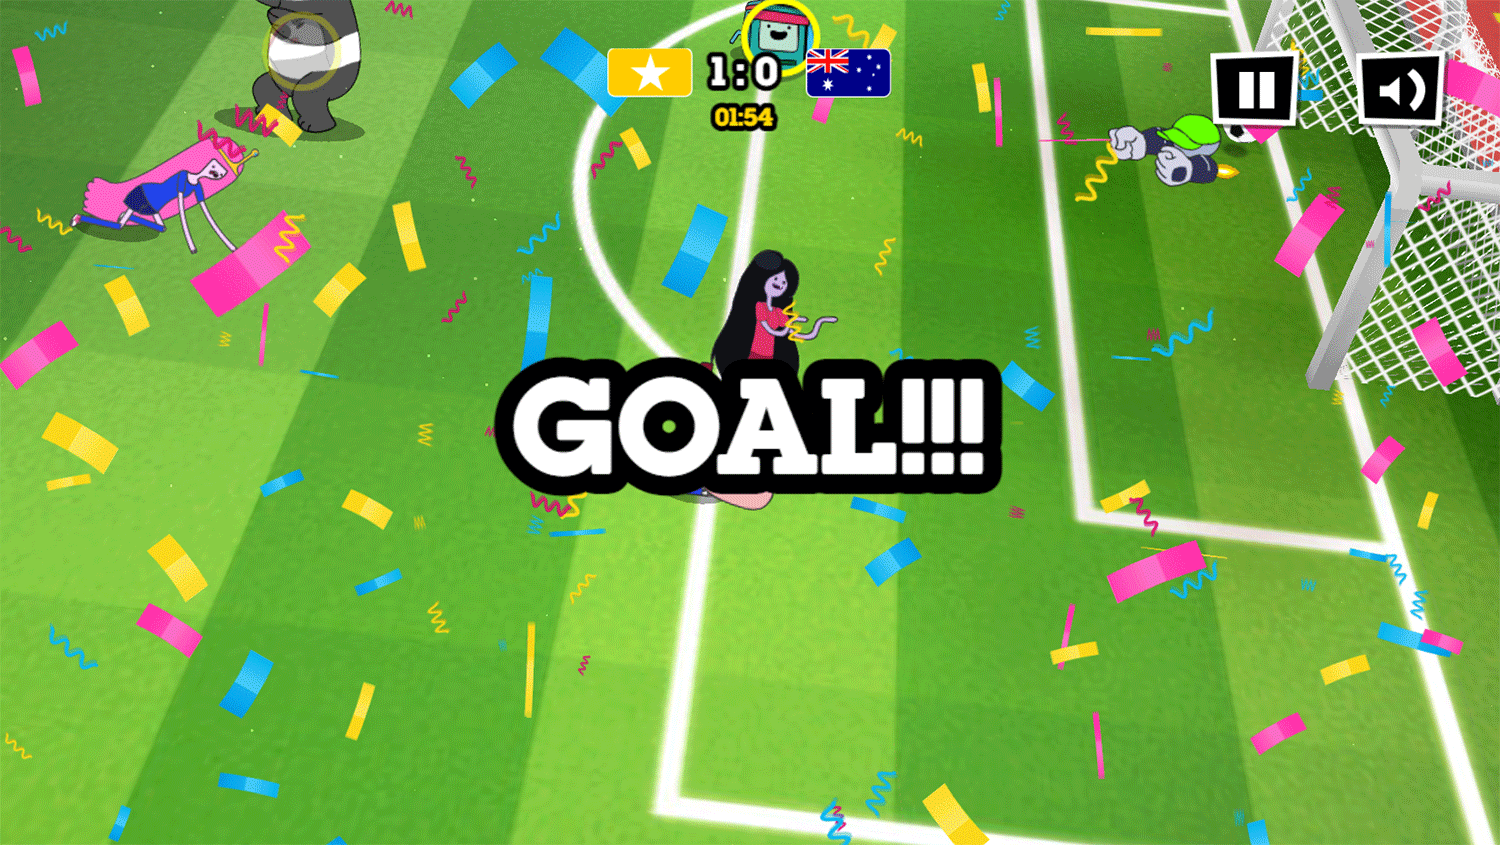 Toon Cup 2018 Goal Screenshot.